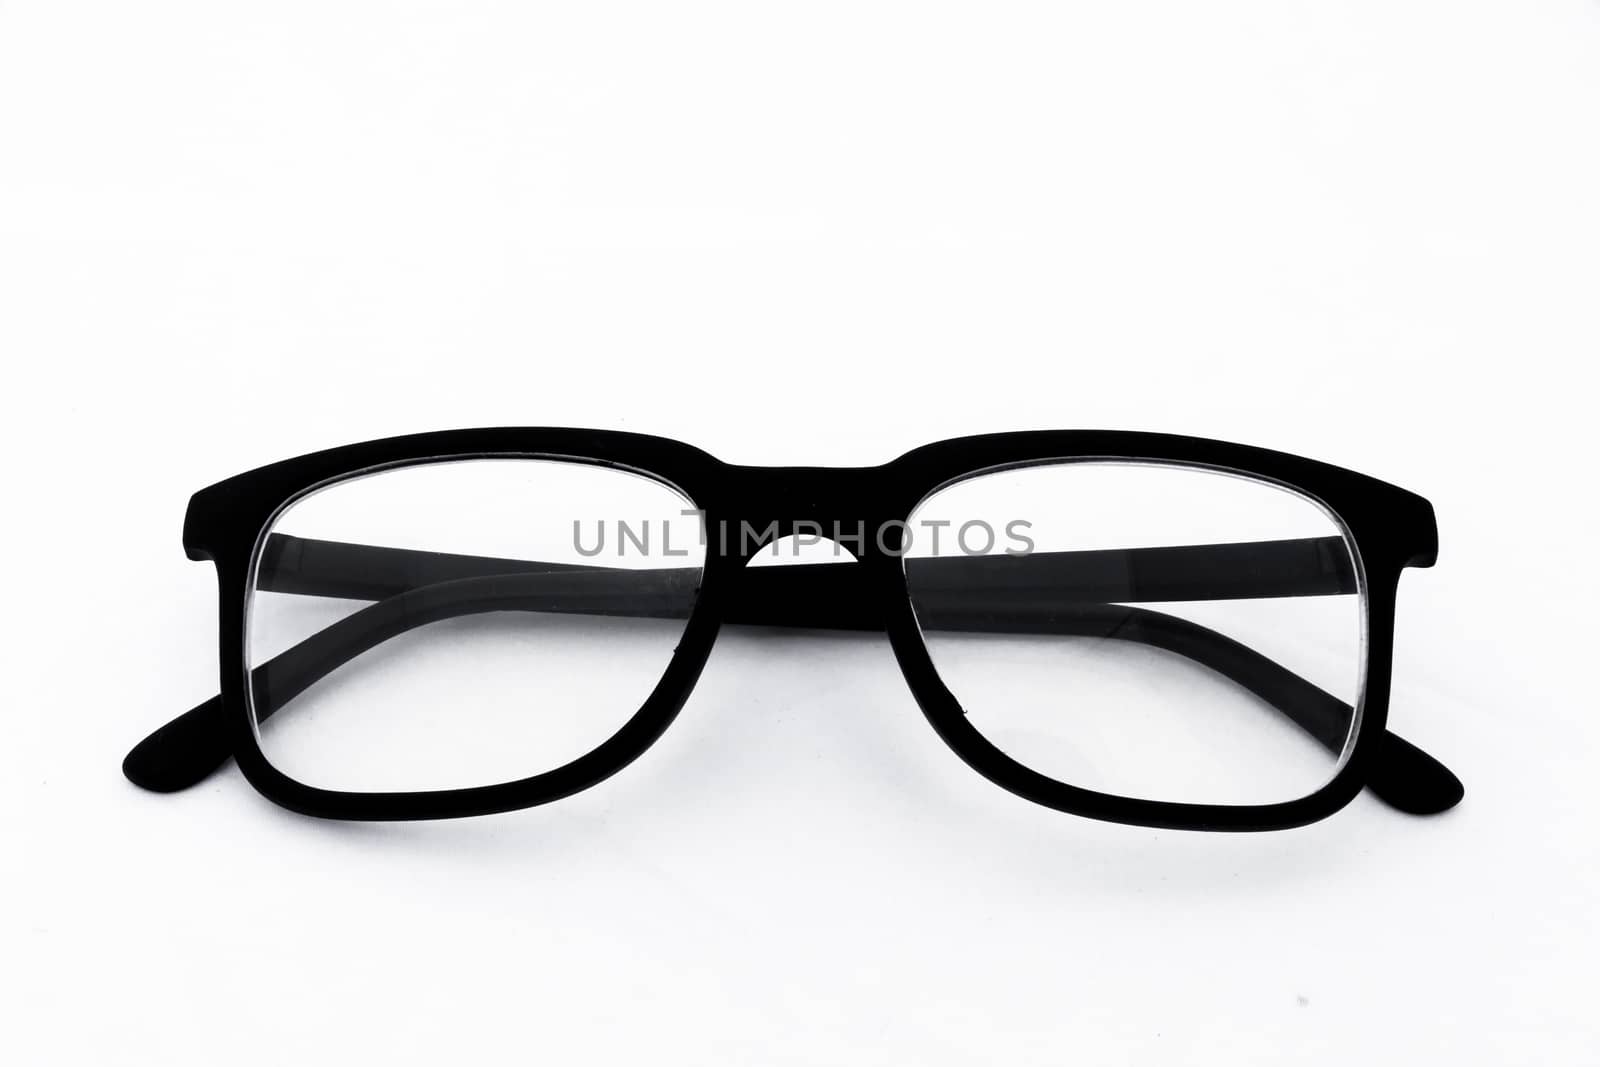 Object eyeglasses isolated on the white.